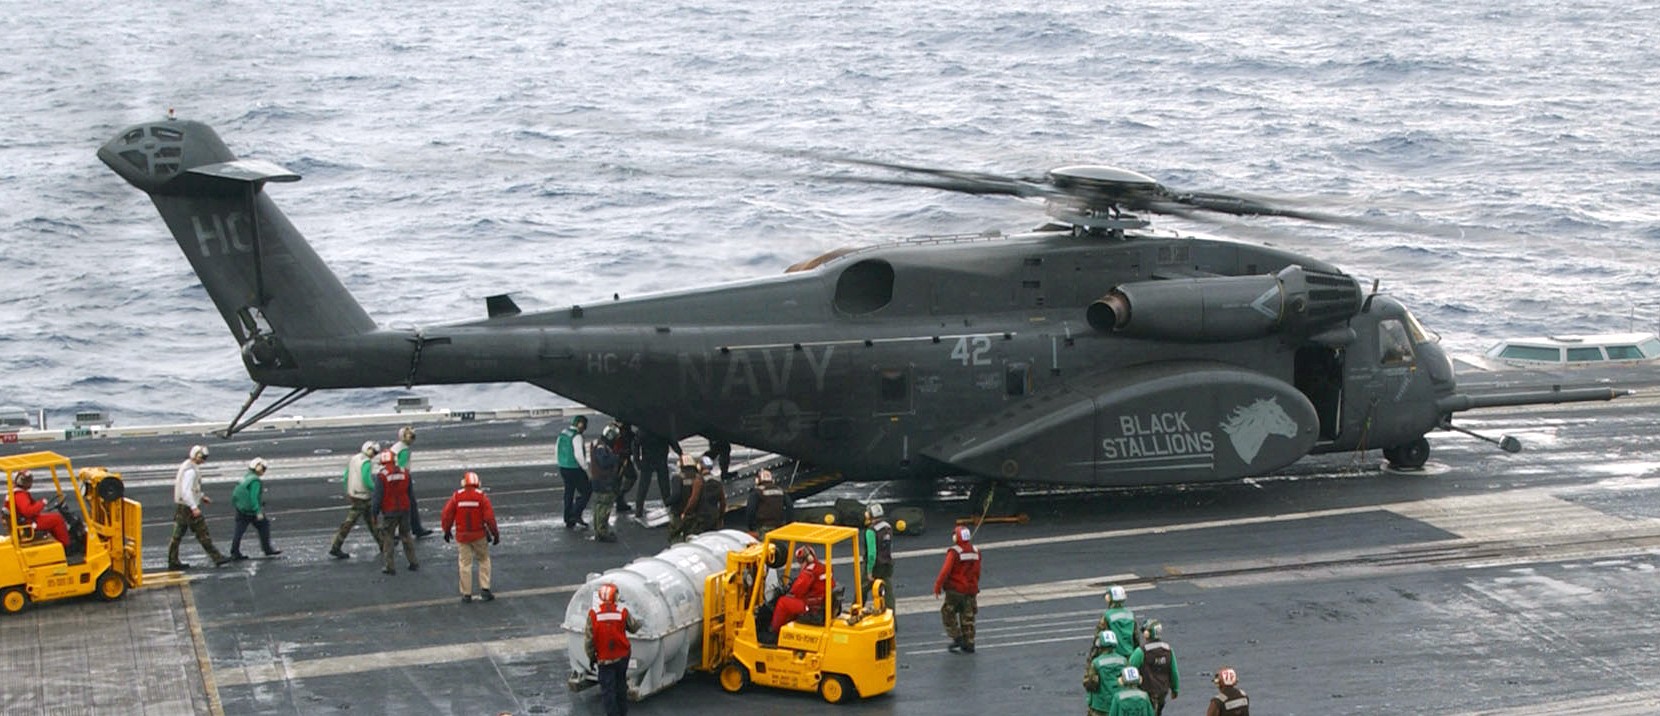 hc-4 black stallions helicopter combat support squadron mh-53e sea dragon 16